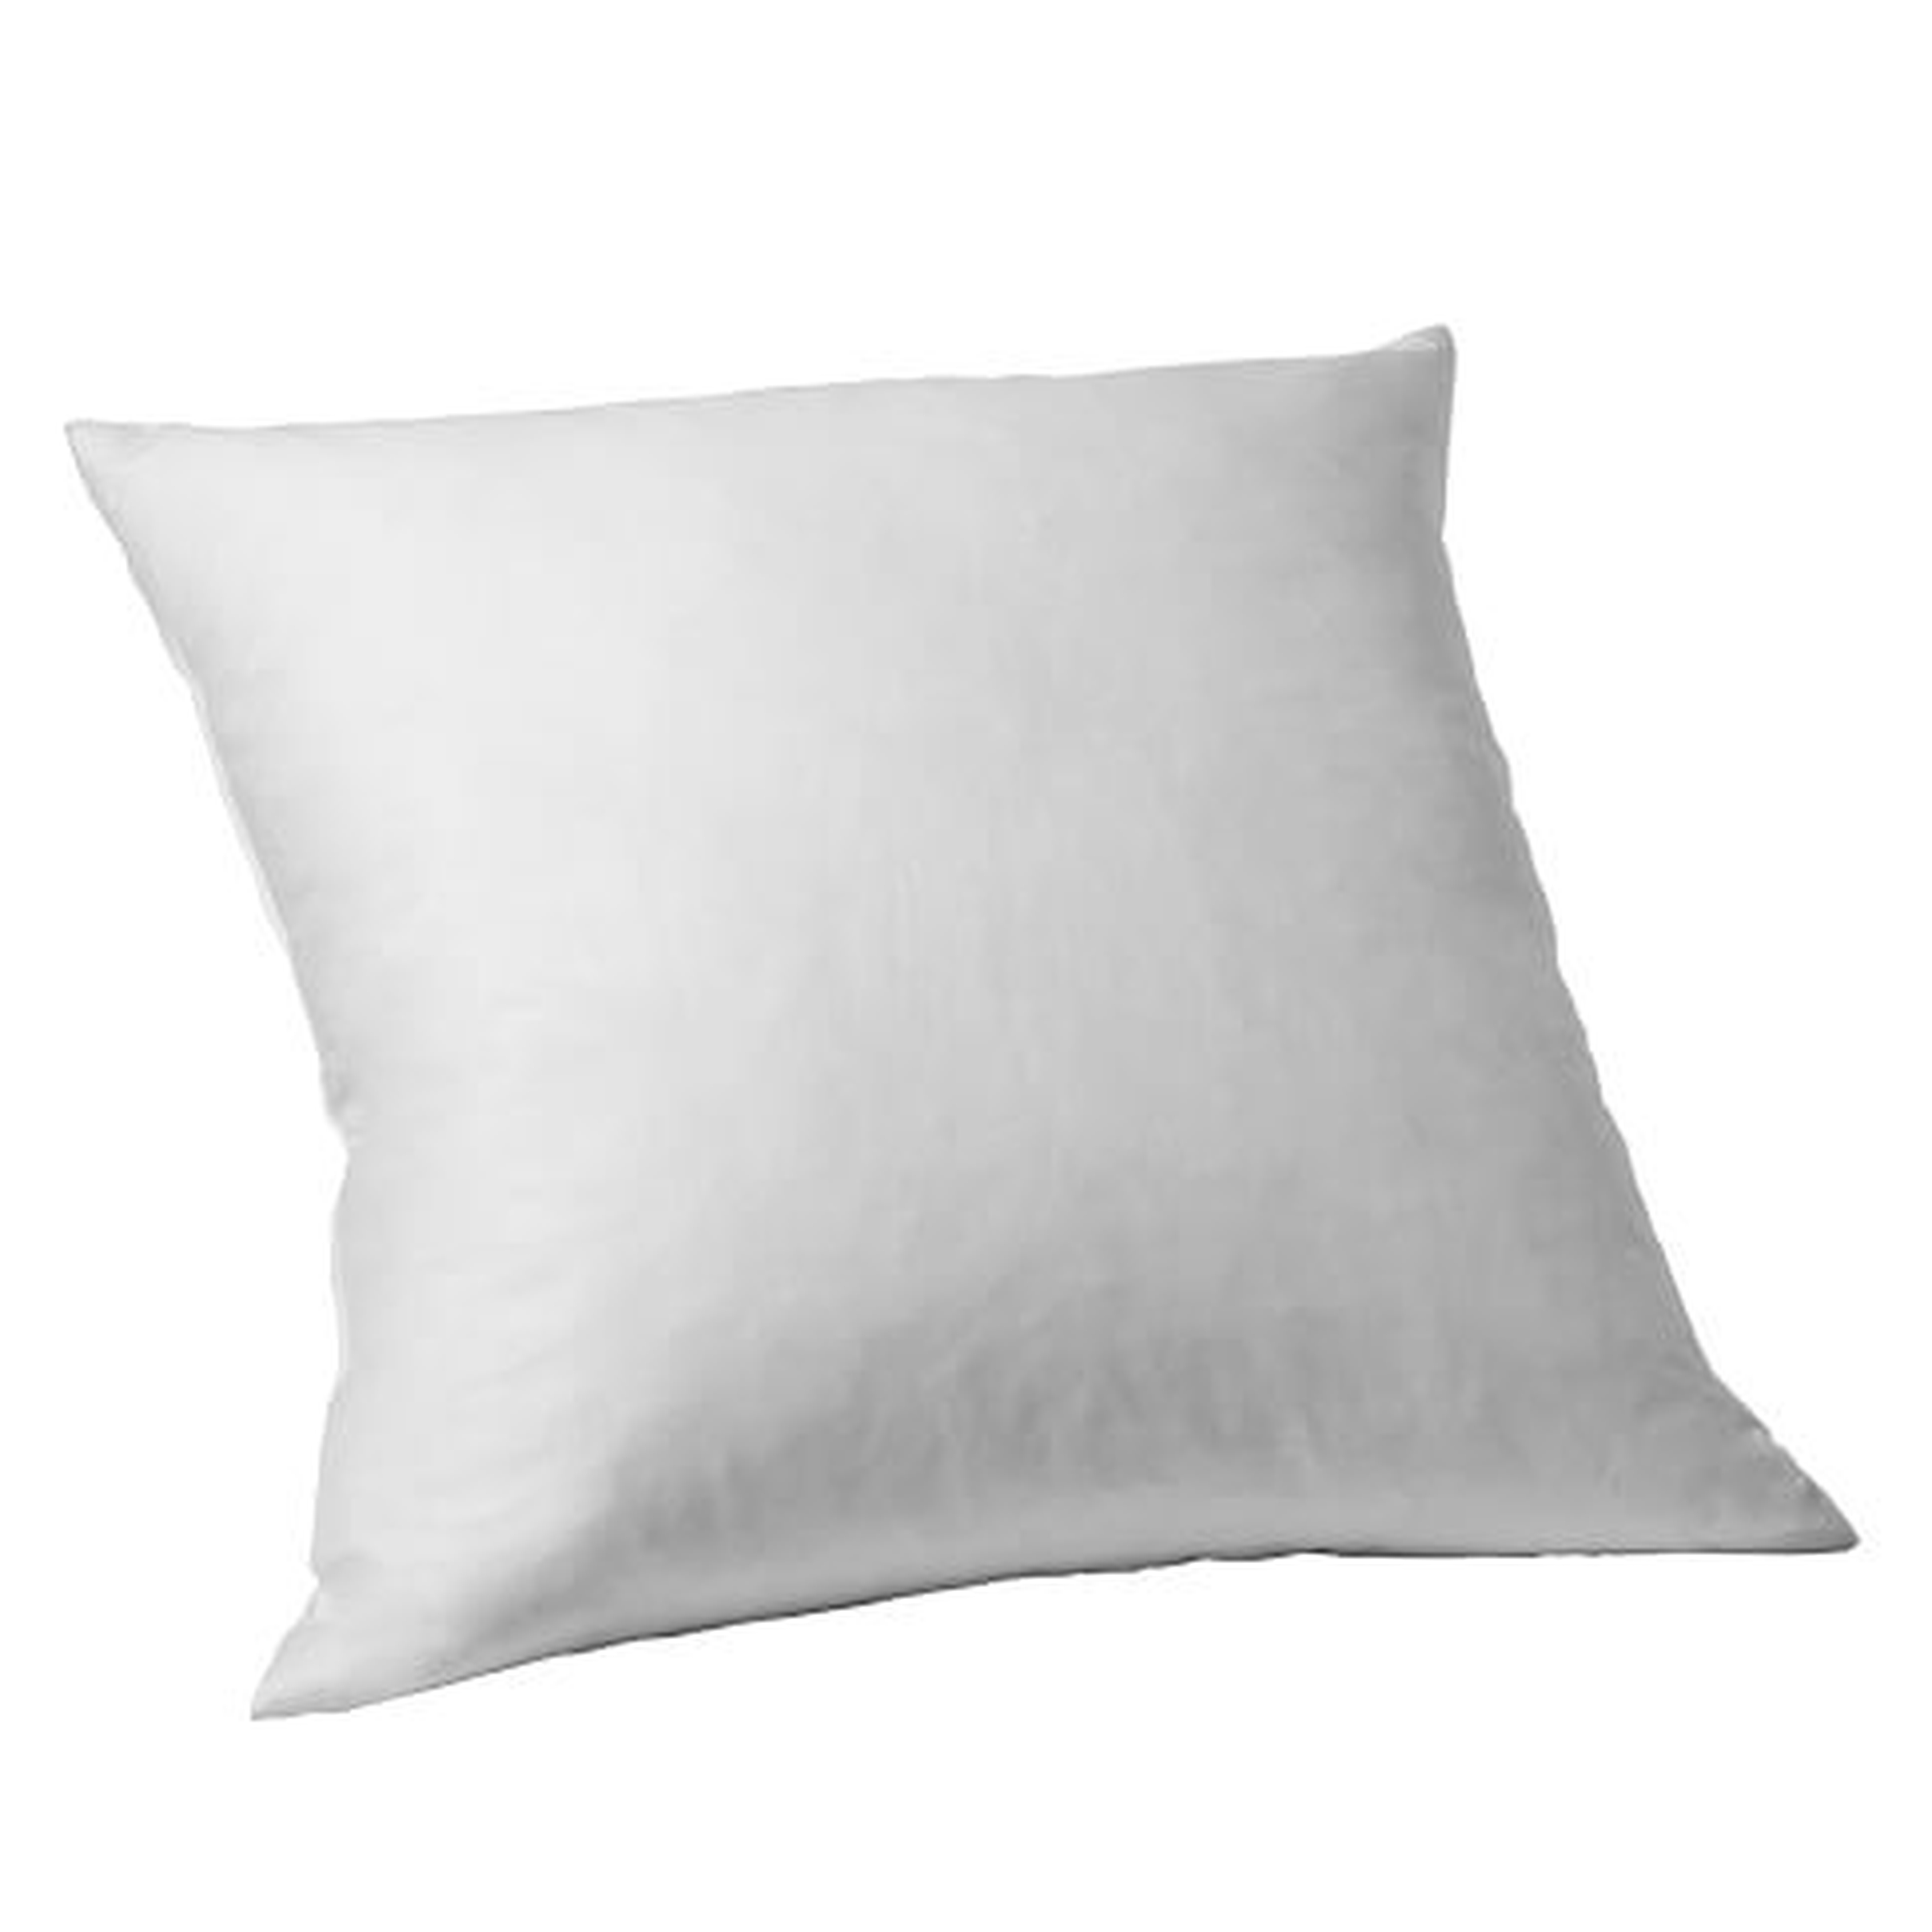 Decorative Pillow Insert – 24" x 24" - Feather - West Elm